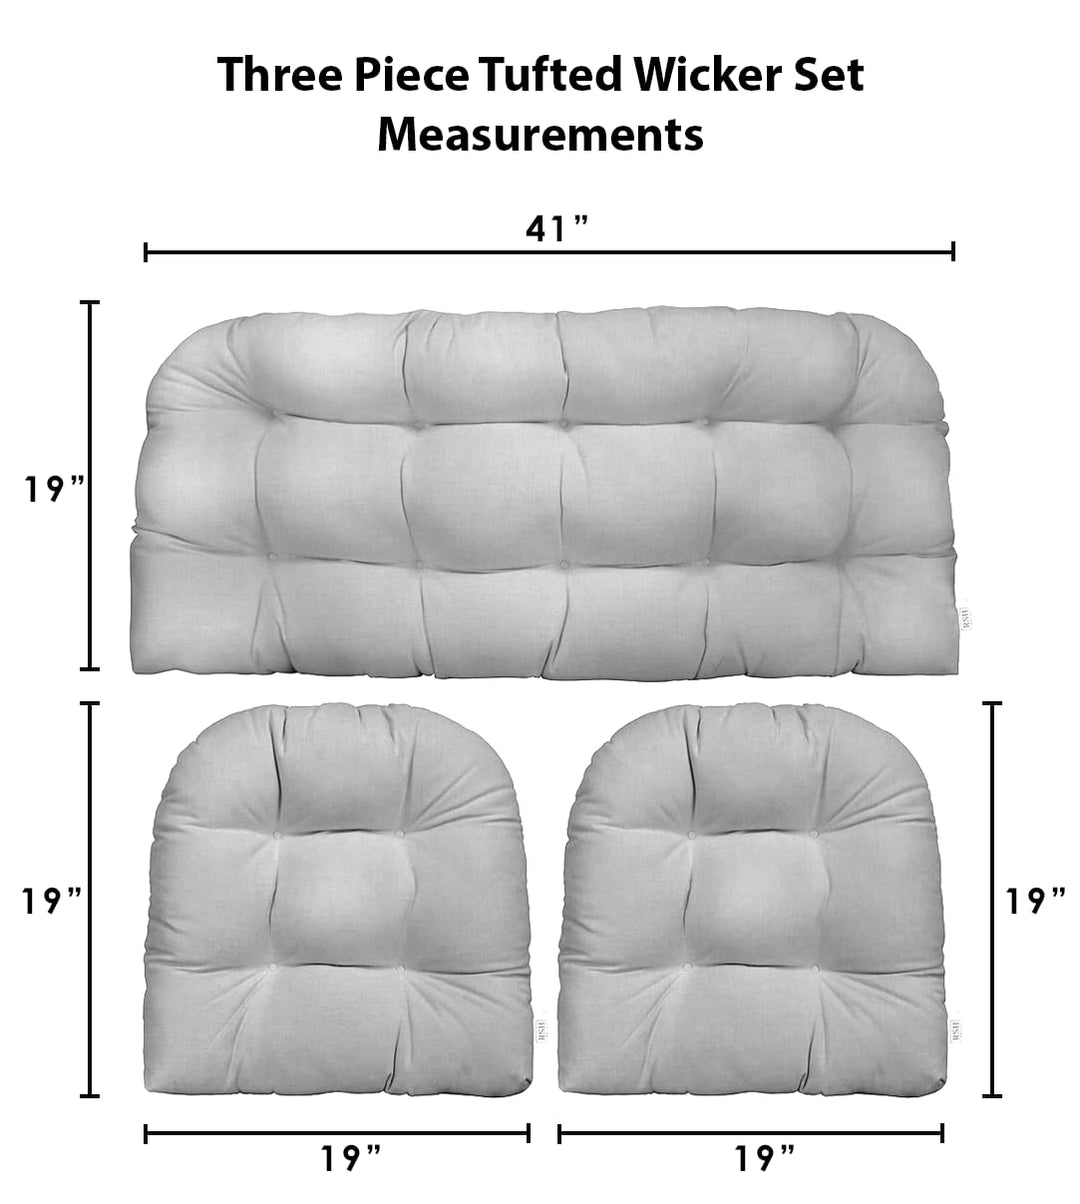 3 Piece Wicker Cushion Set, Tufted, 41" W x 19" D, 19" W x 19" D, Gould Red Blue Floral - RSH Decor